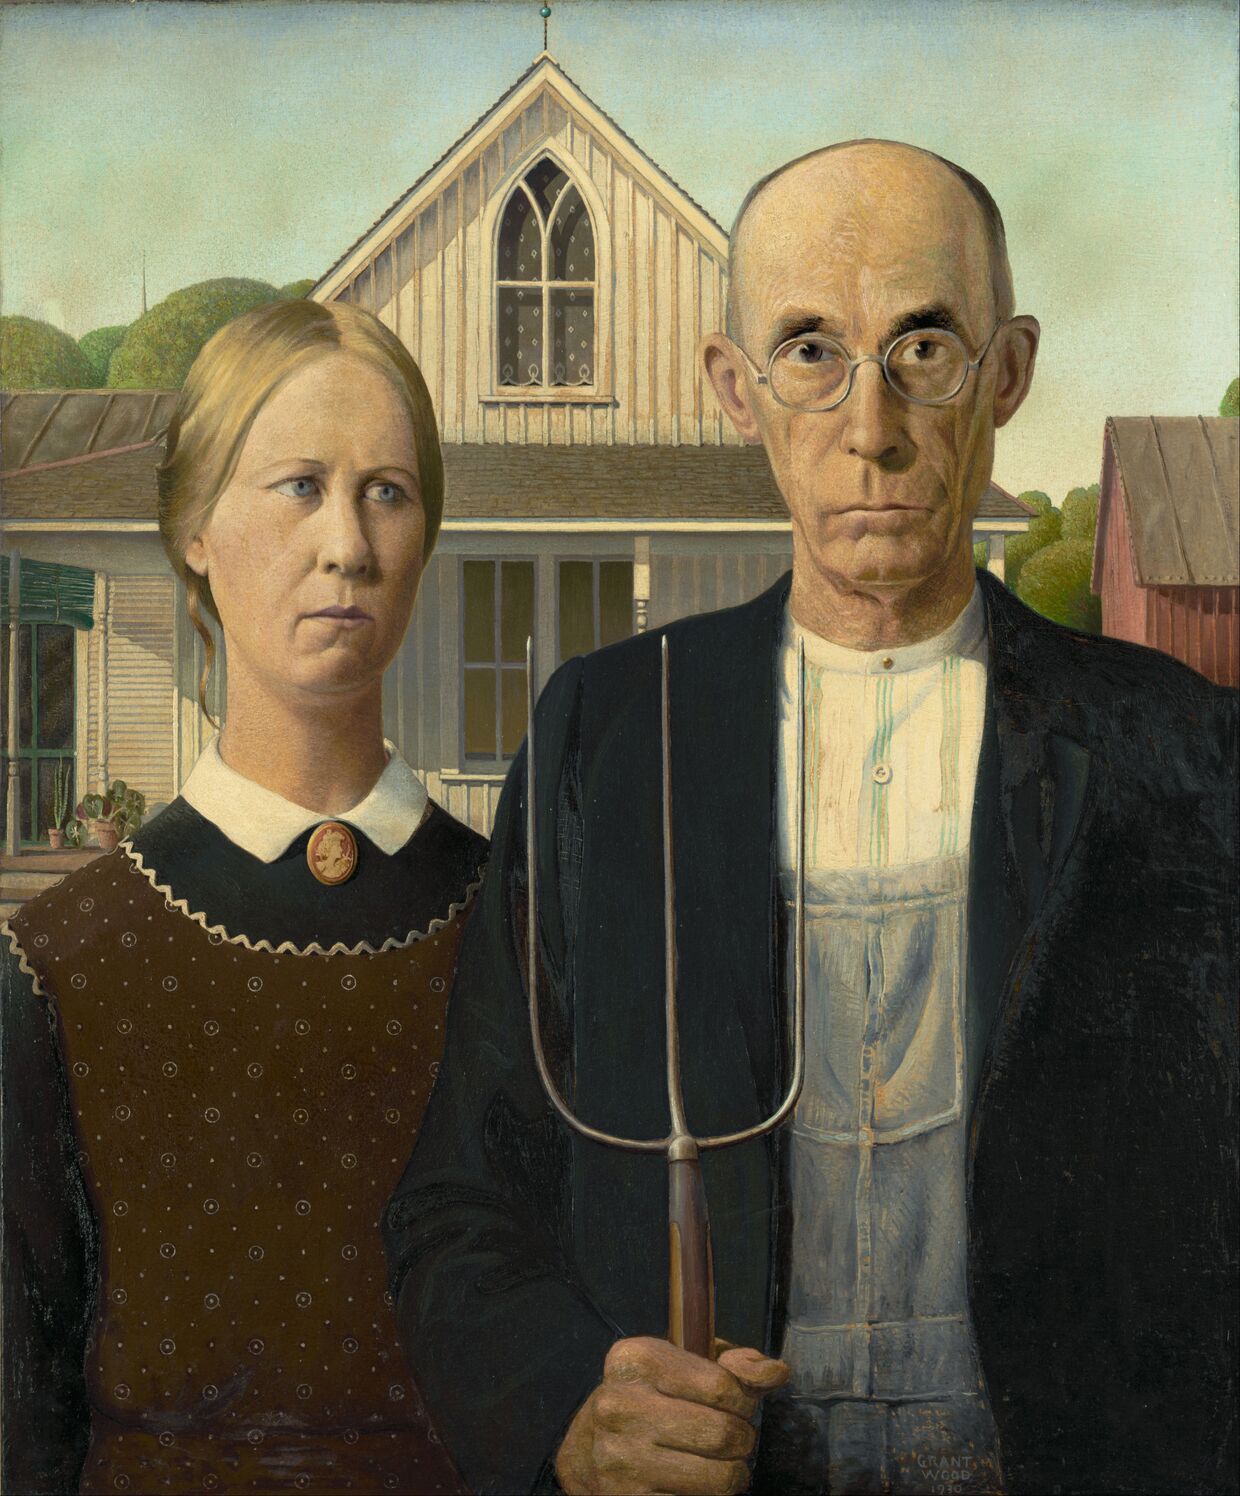 «Американская готика» (American Gothic) — картина американского художника Гранта Вуда (Grant Wood), созданная в 1930 году. 